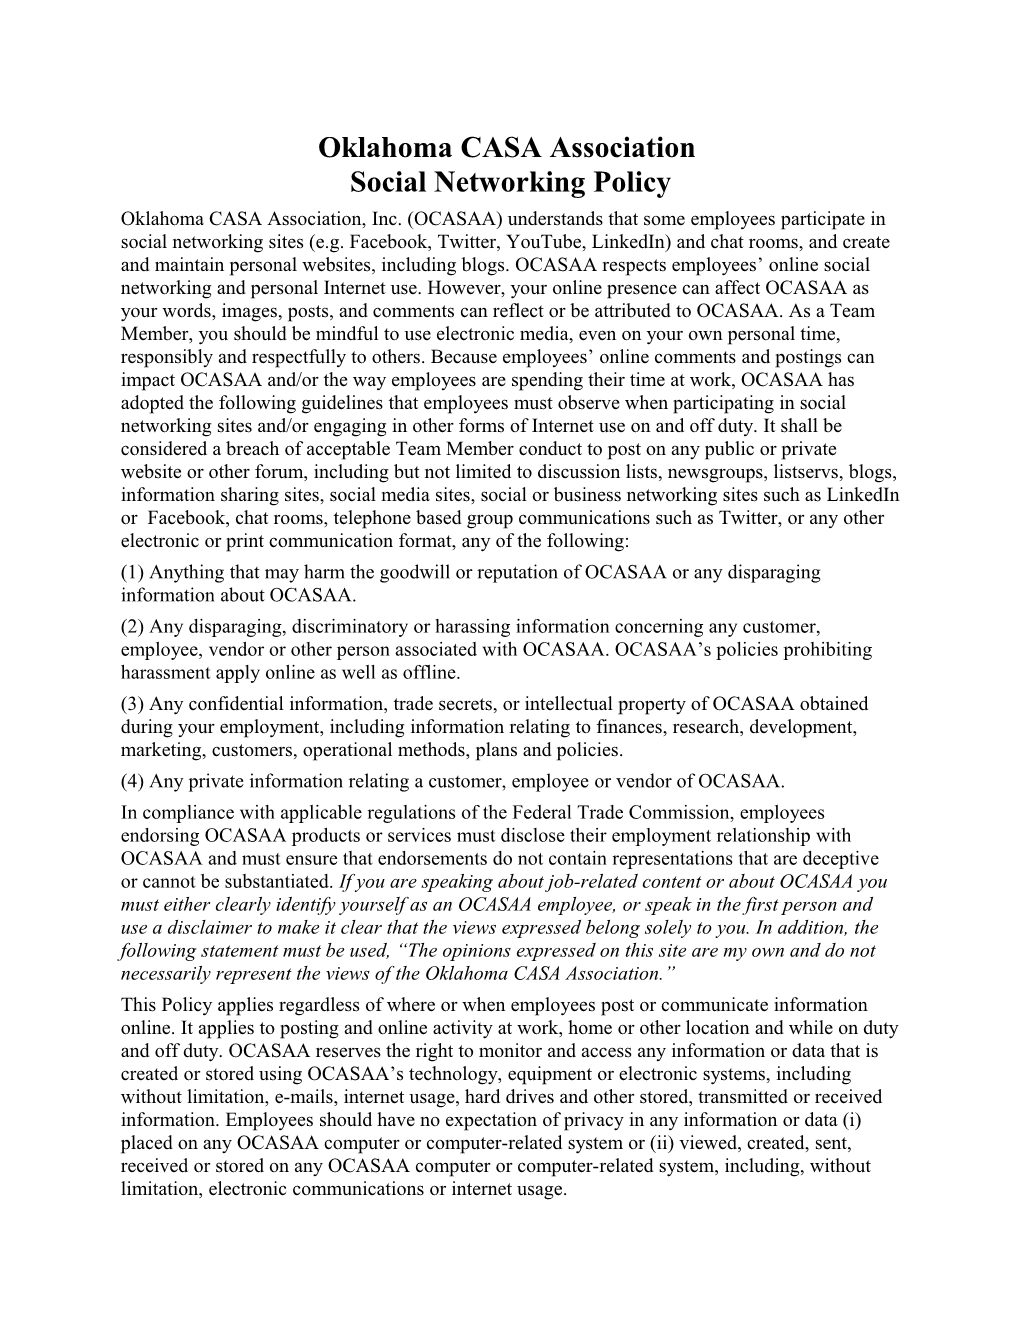 Oklahoma CASA Association Social Networking Policy